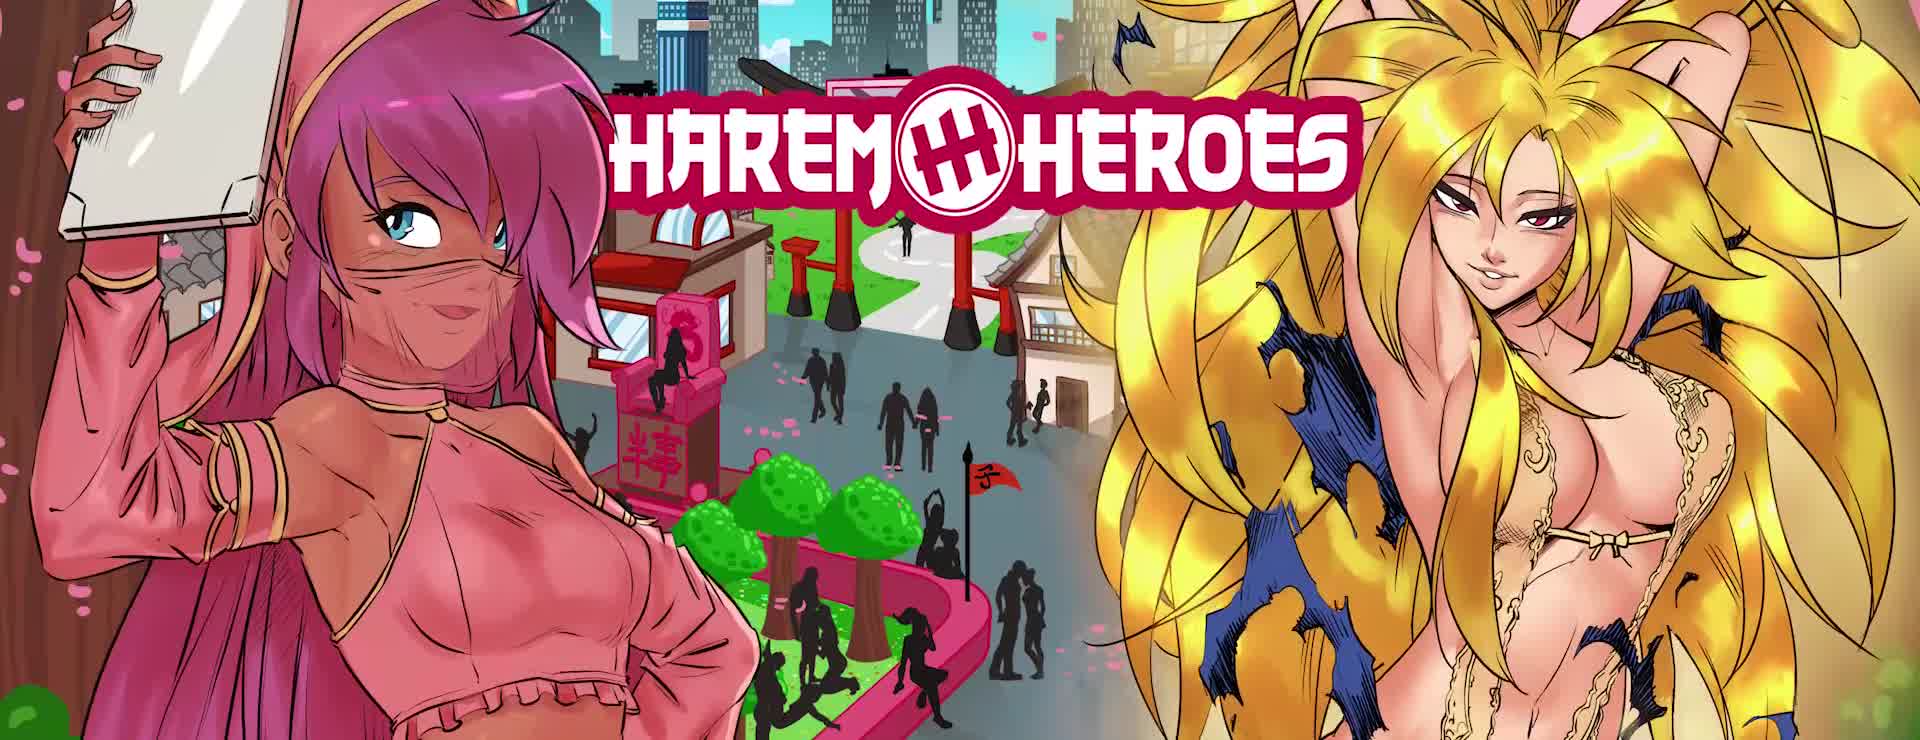 Harem heroes